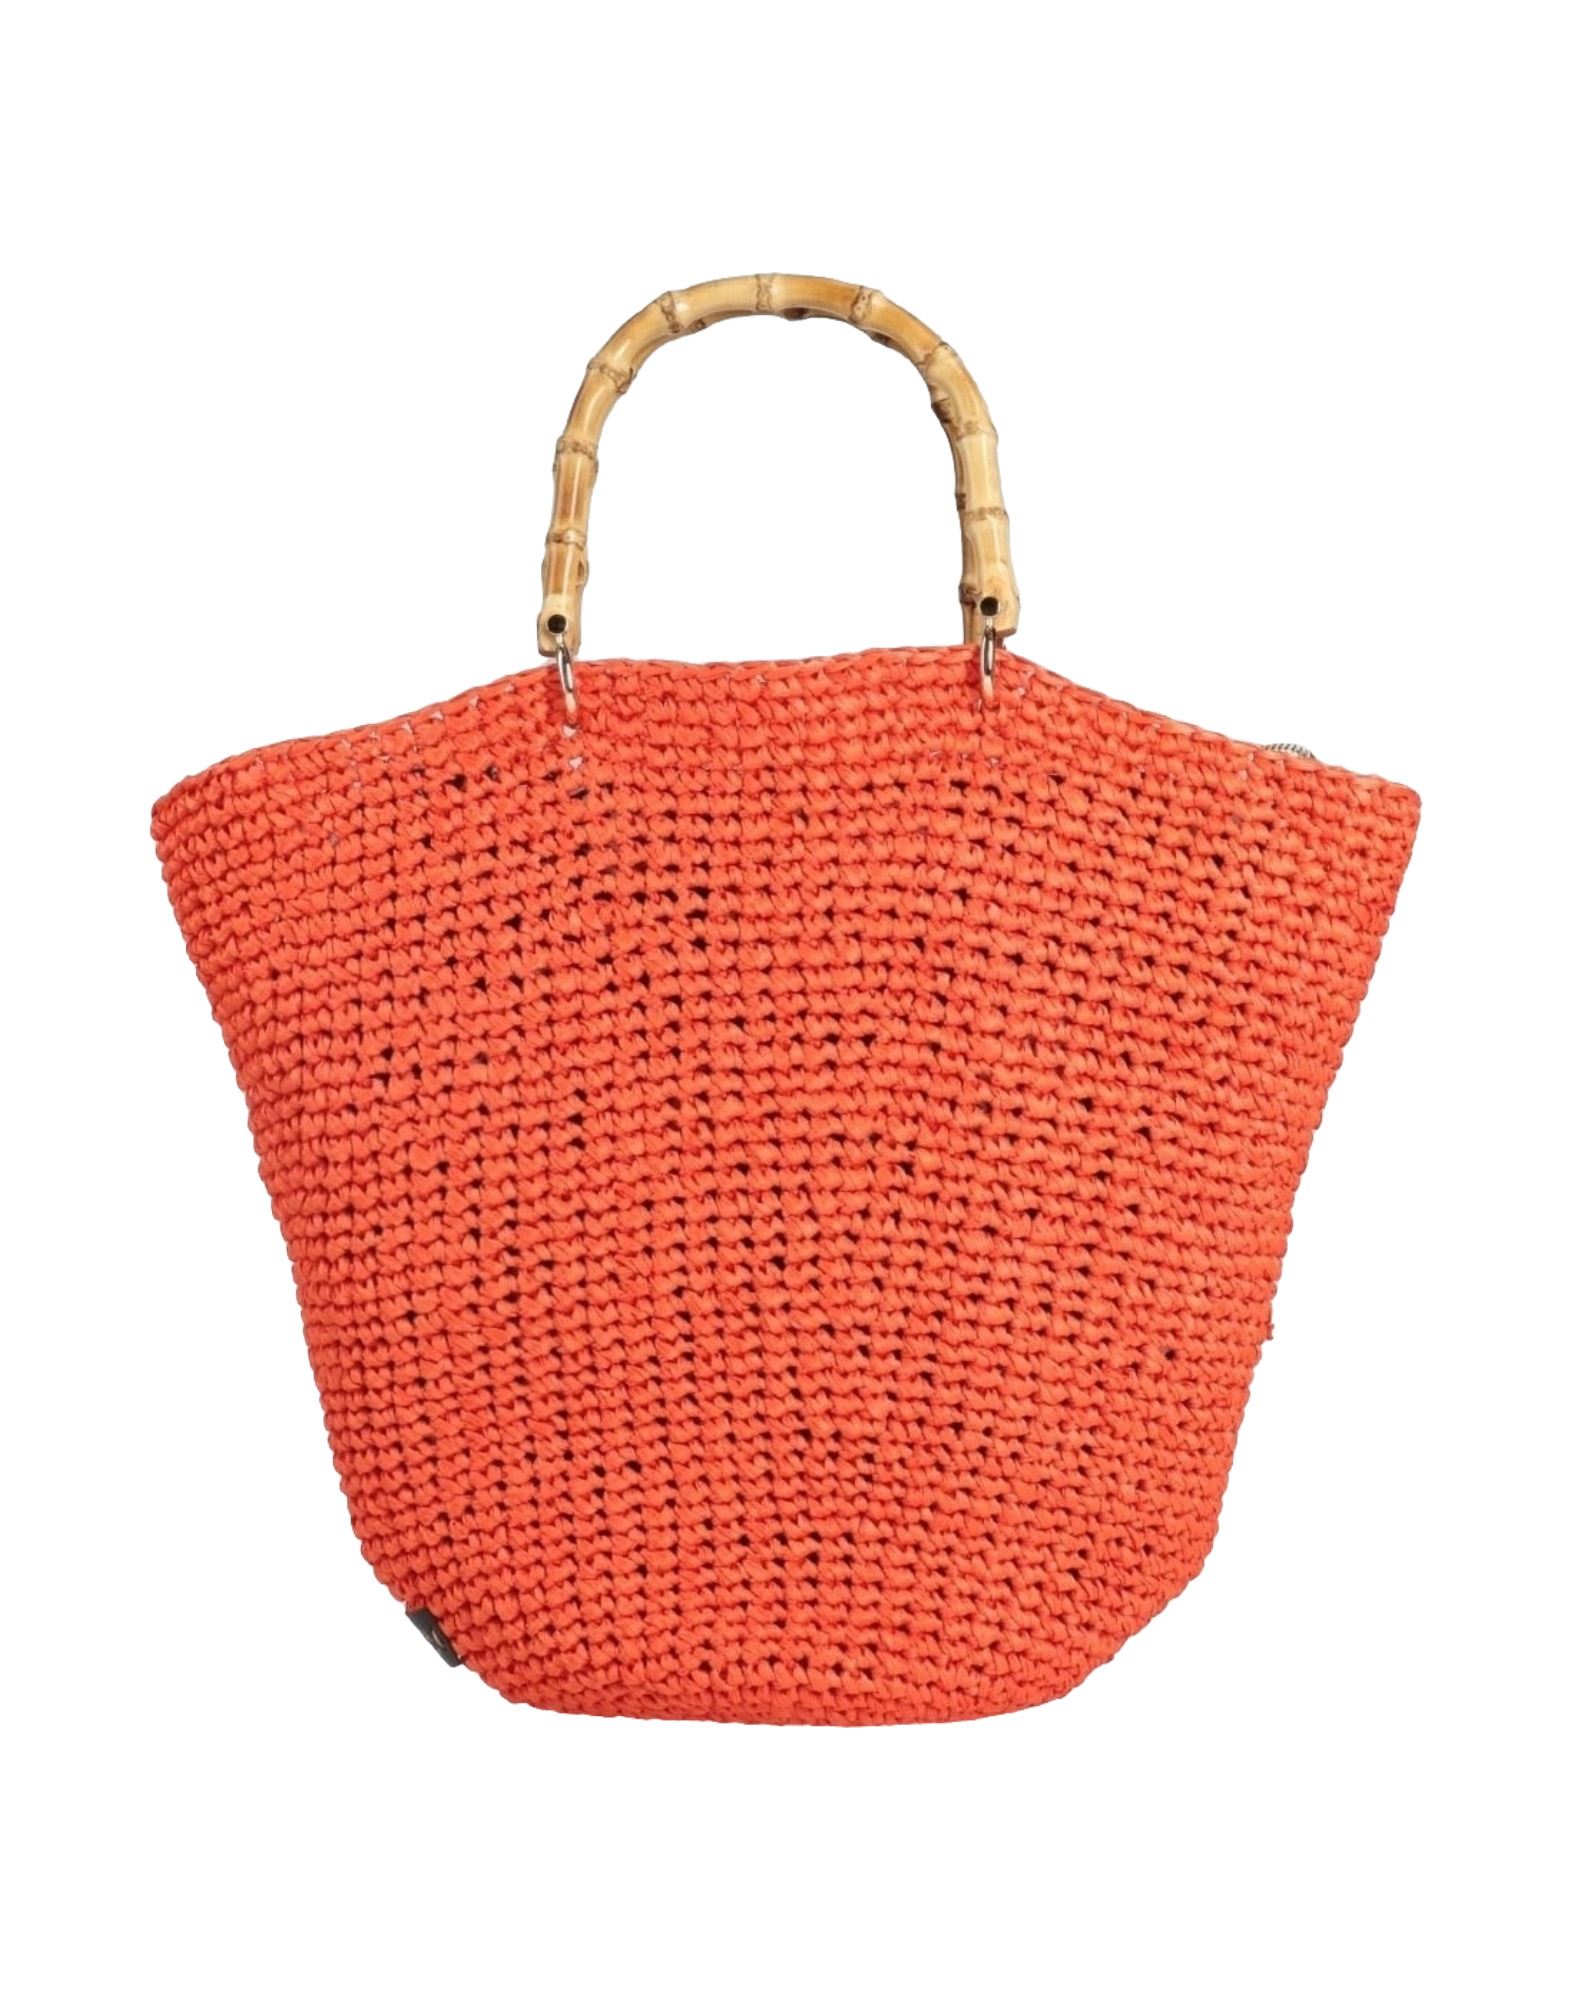 Chica Handbags In Orange